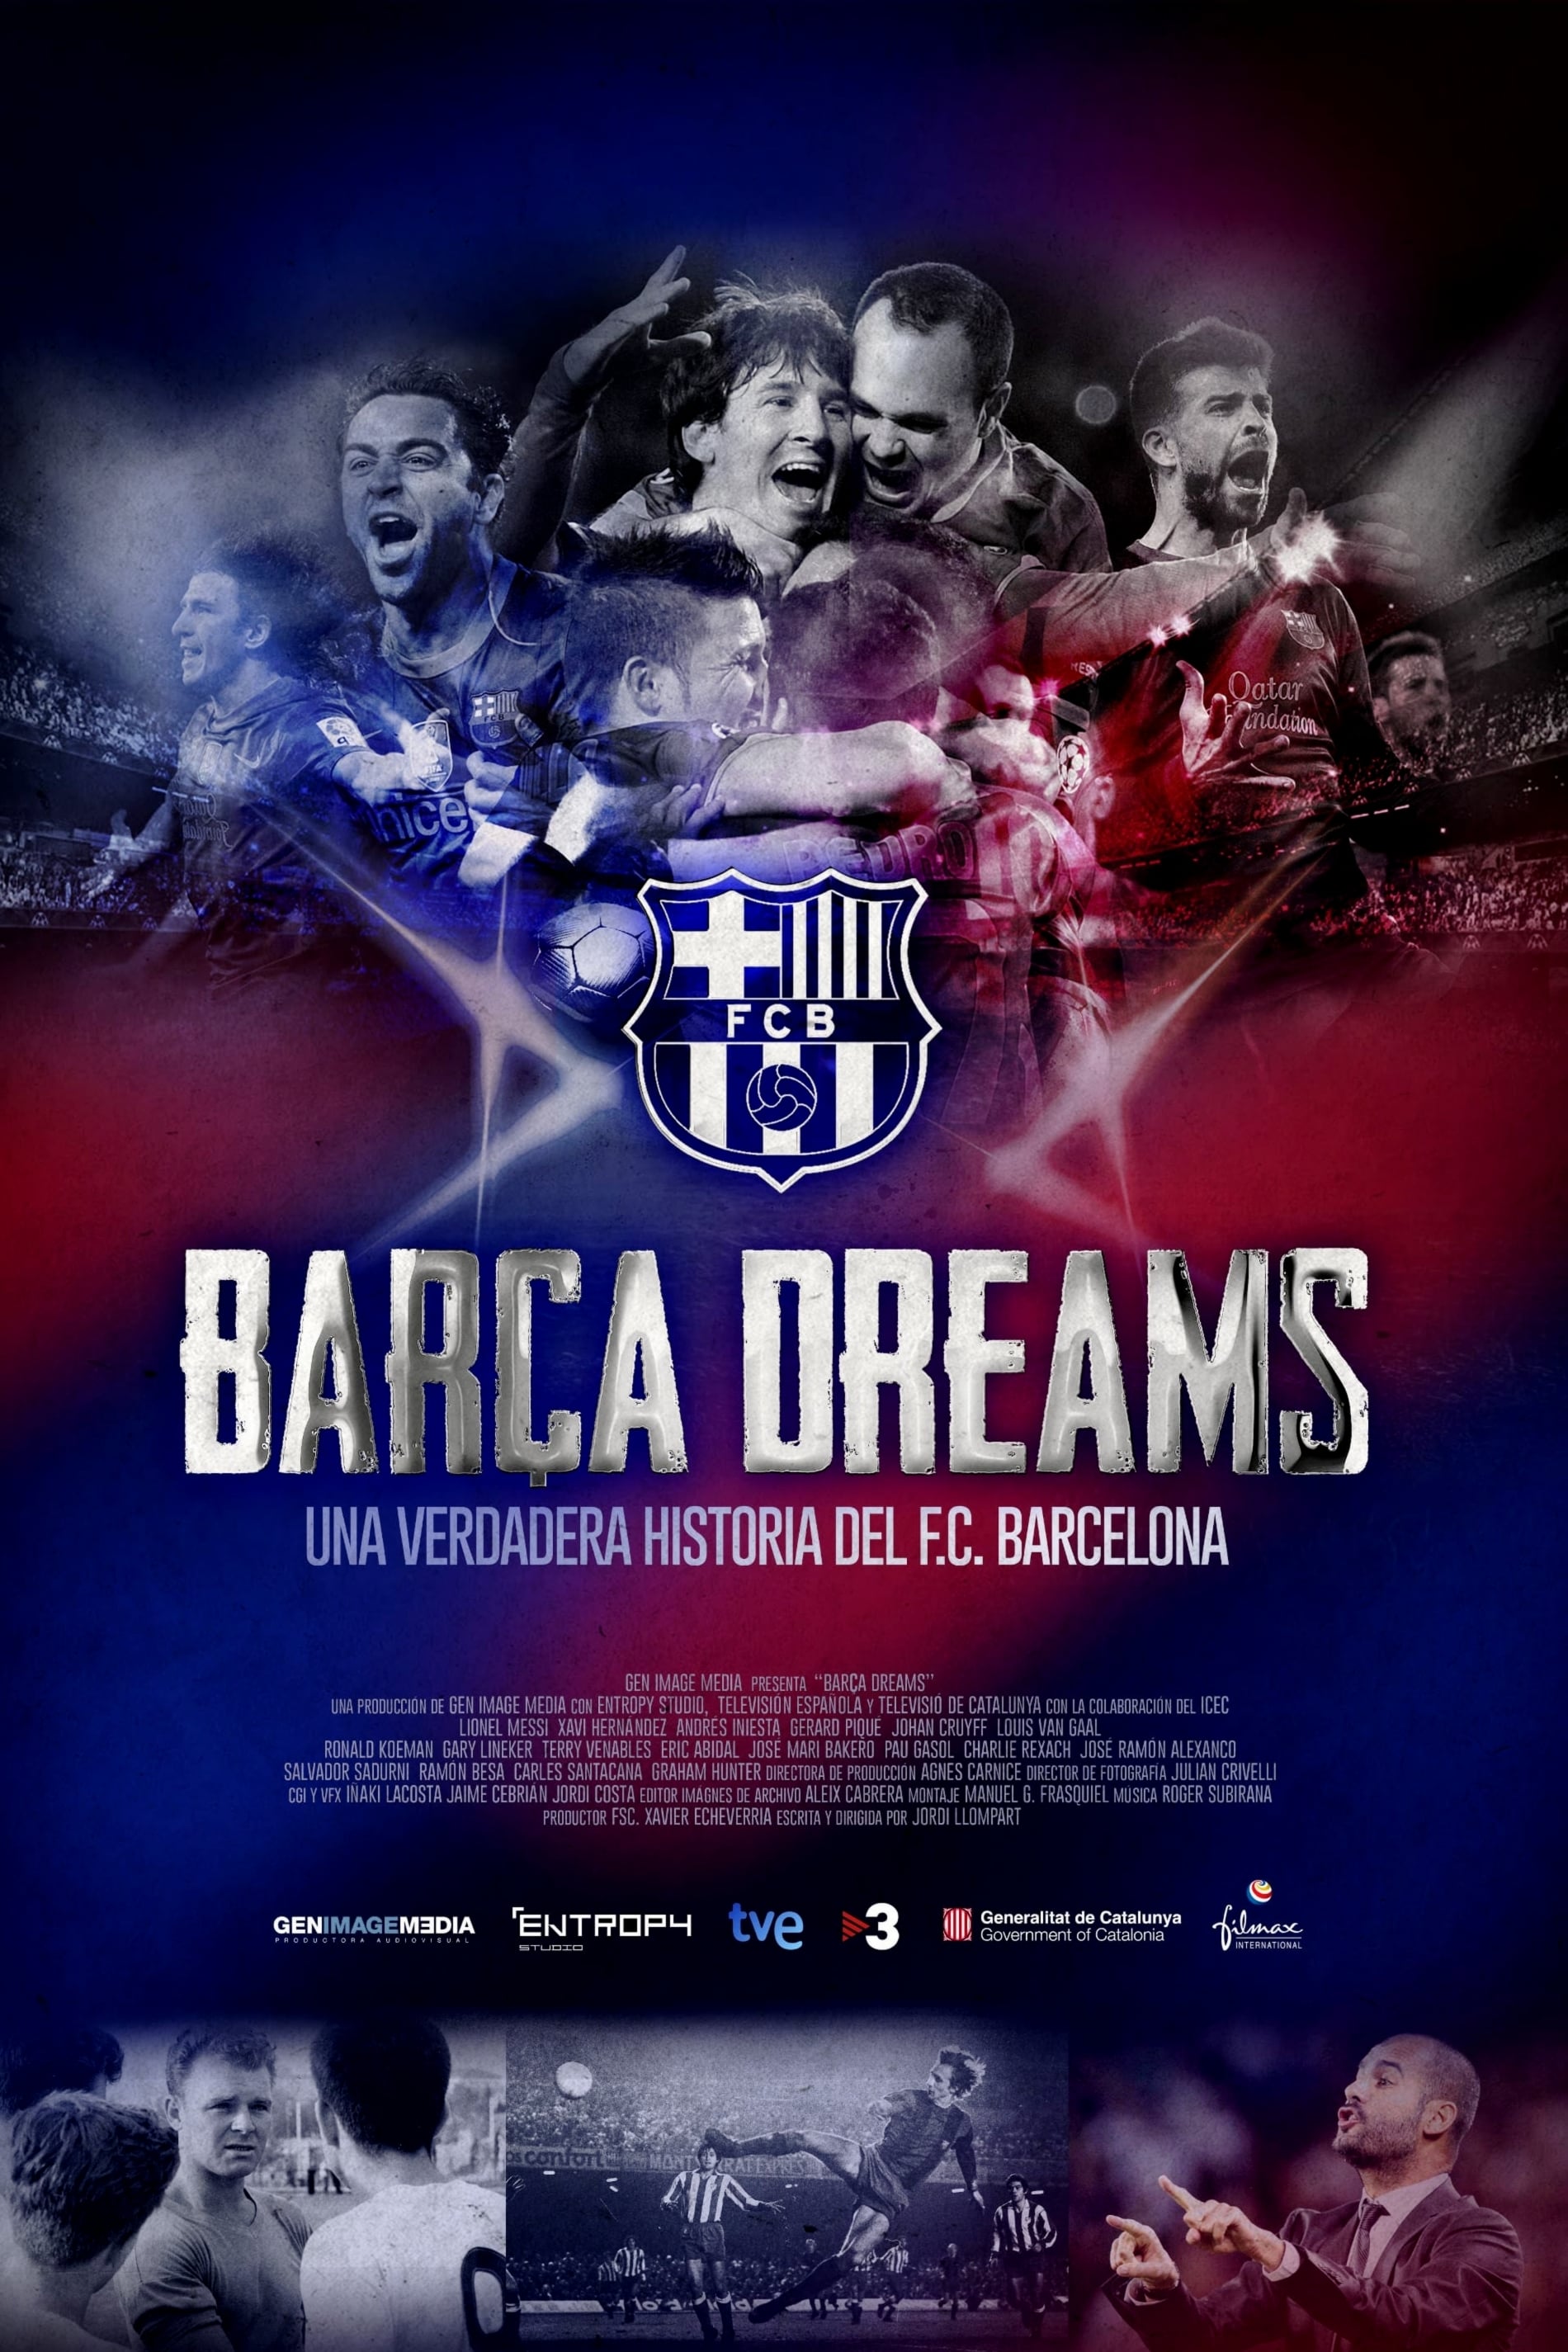 Caratula de Barça Dreams (Barça Dreams) 